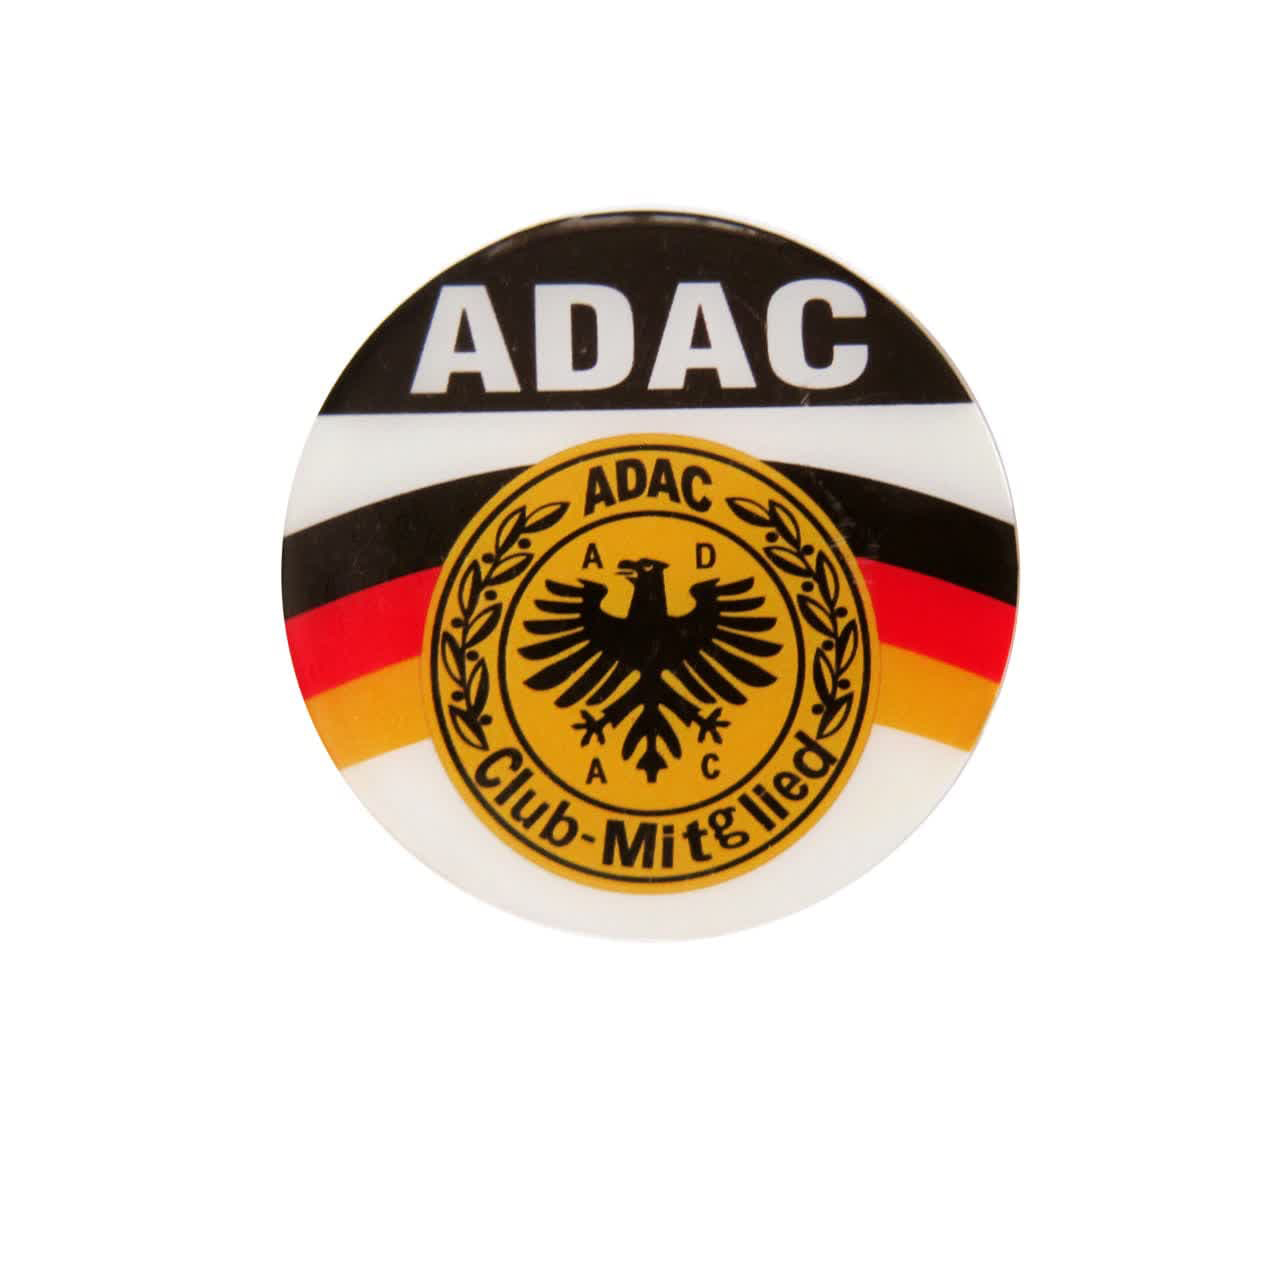  برچسب خودرو طرح ADAC کد k2020